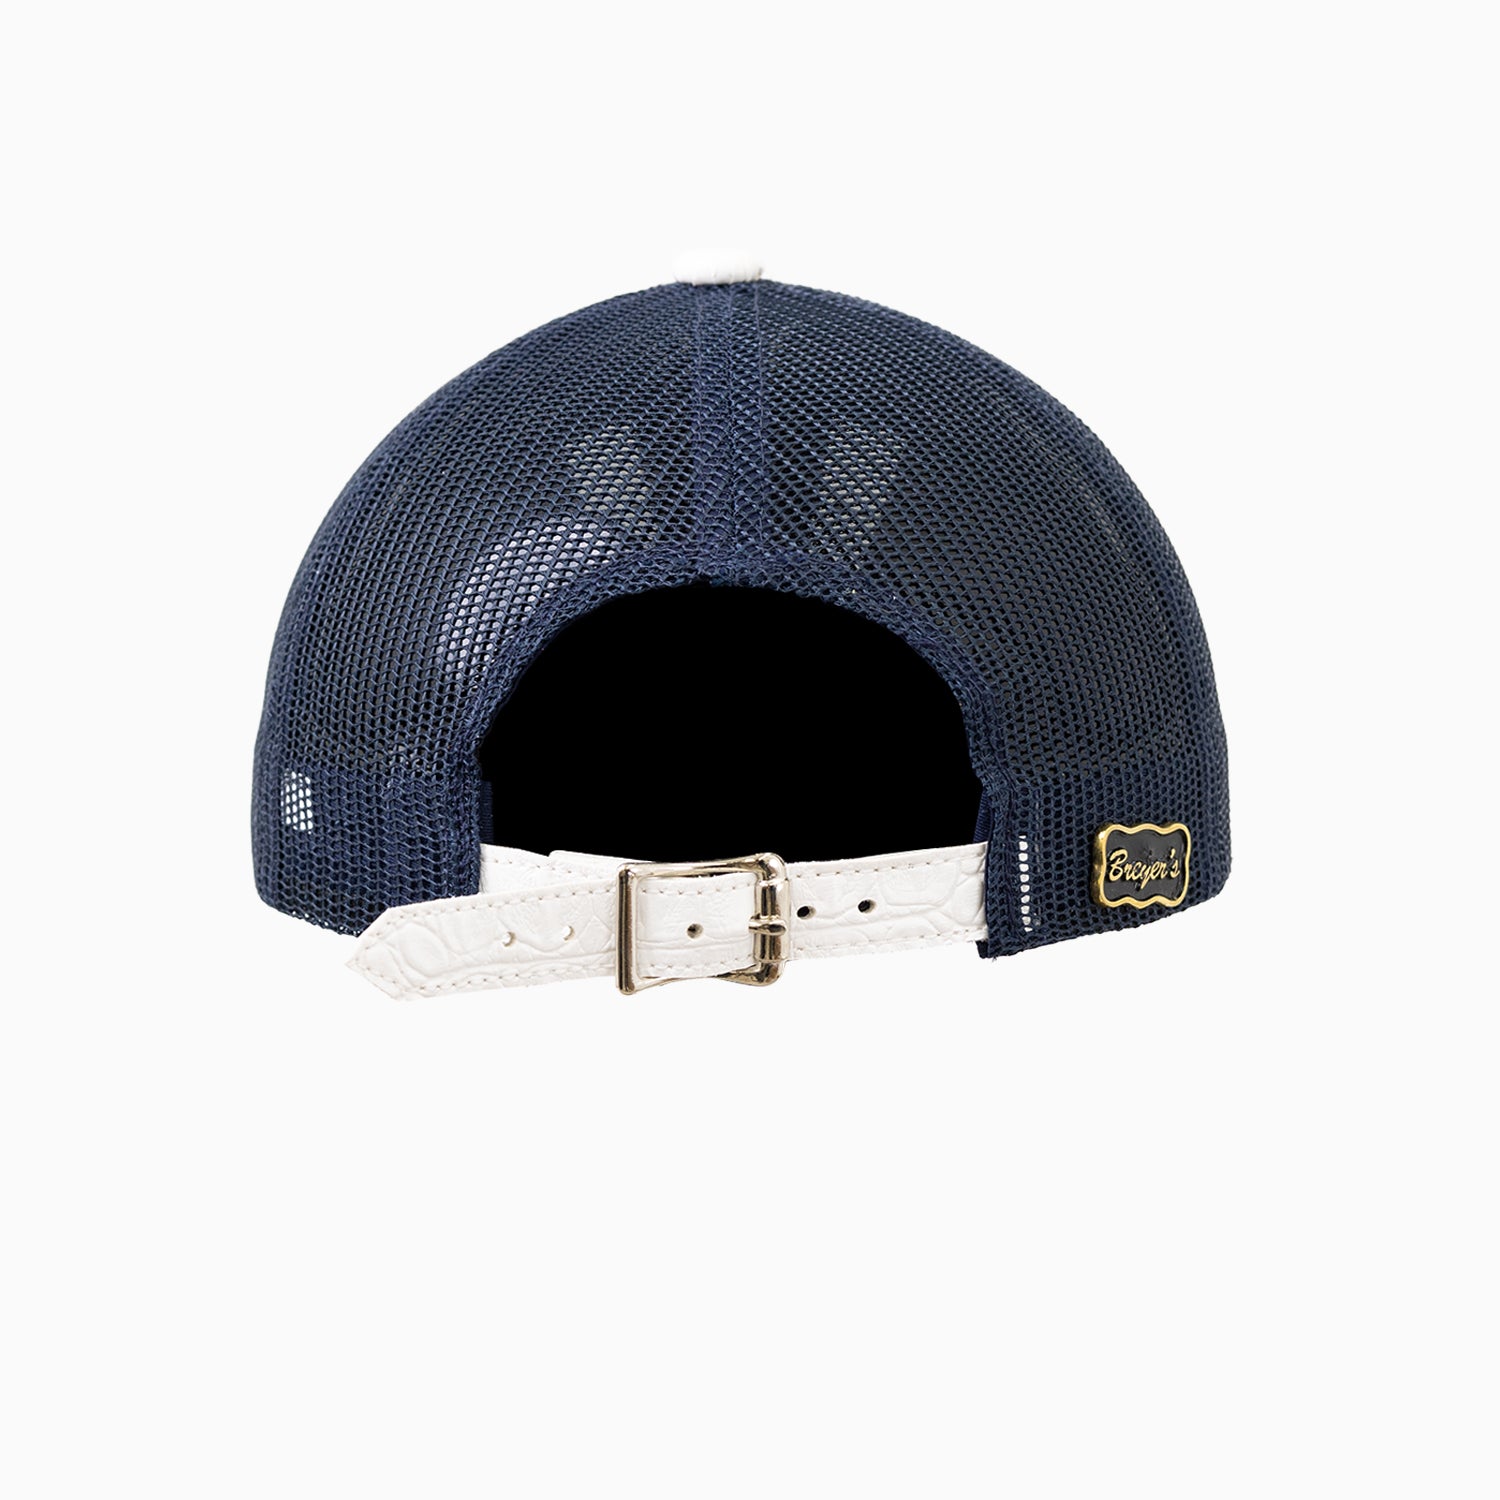 breyers-buck-50-wool-trucker-hat-with-leather-visor-breyers-twh-nvy-wht